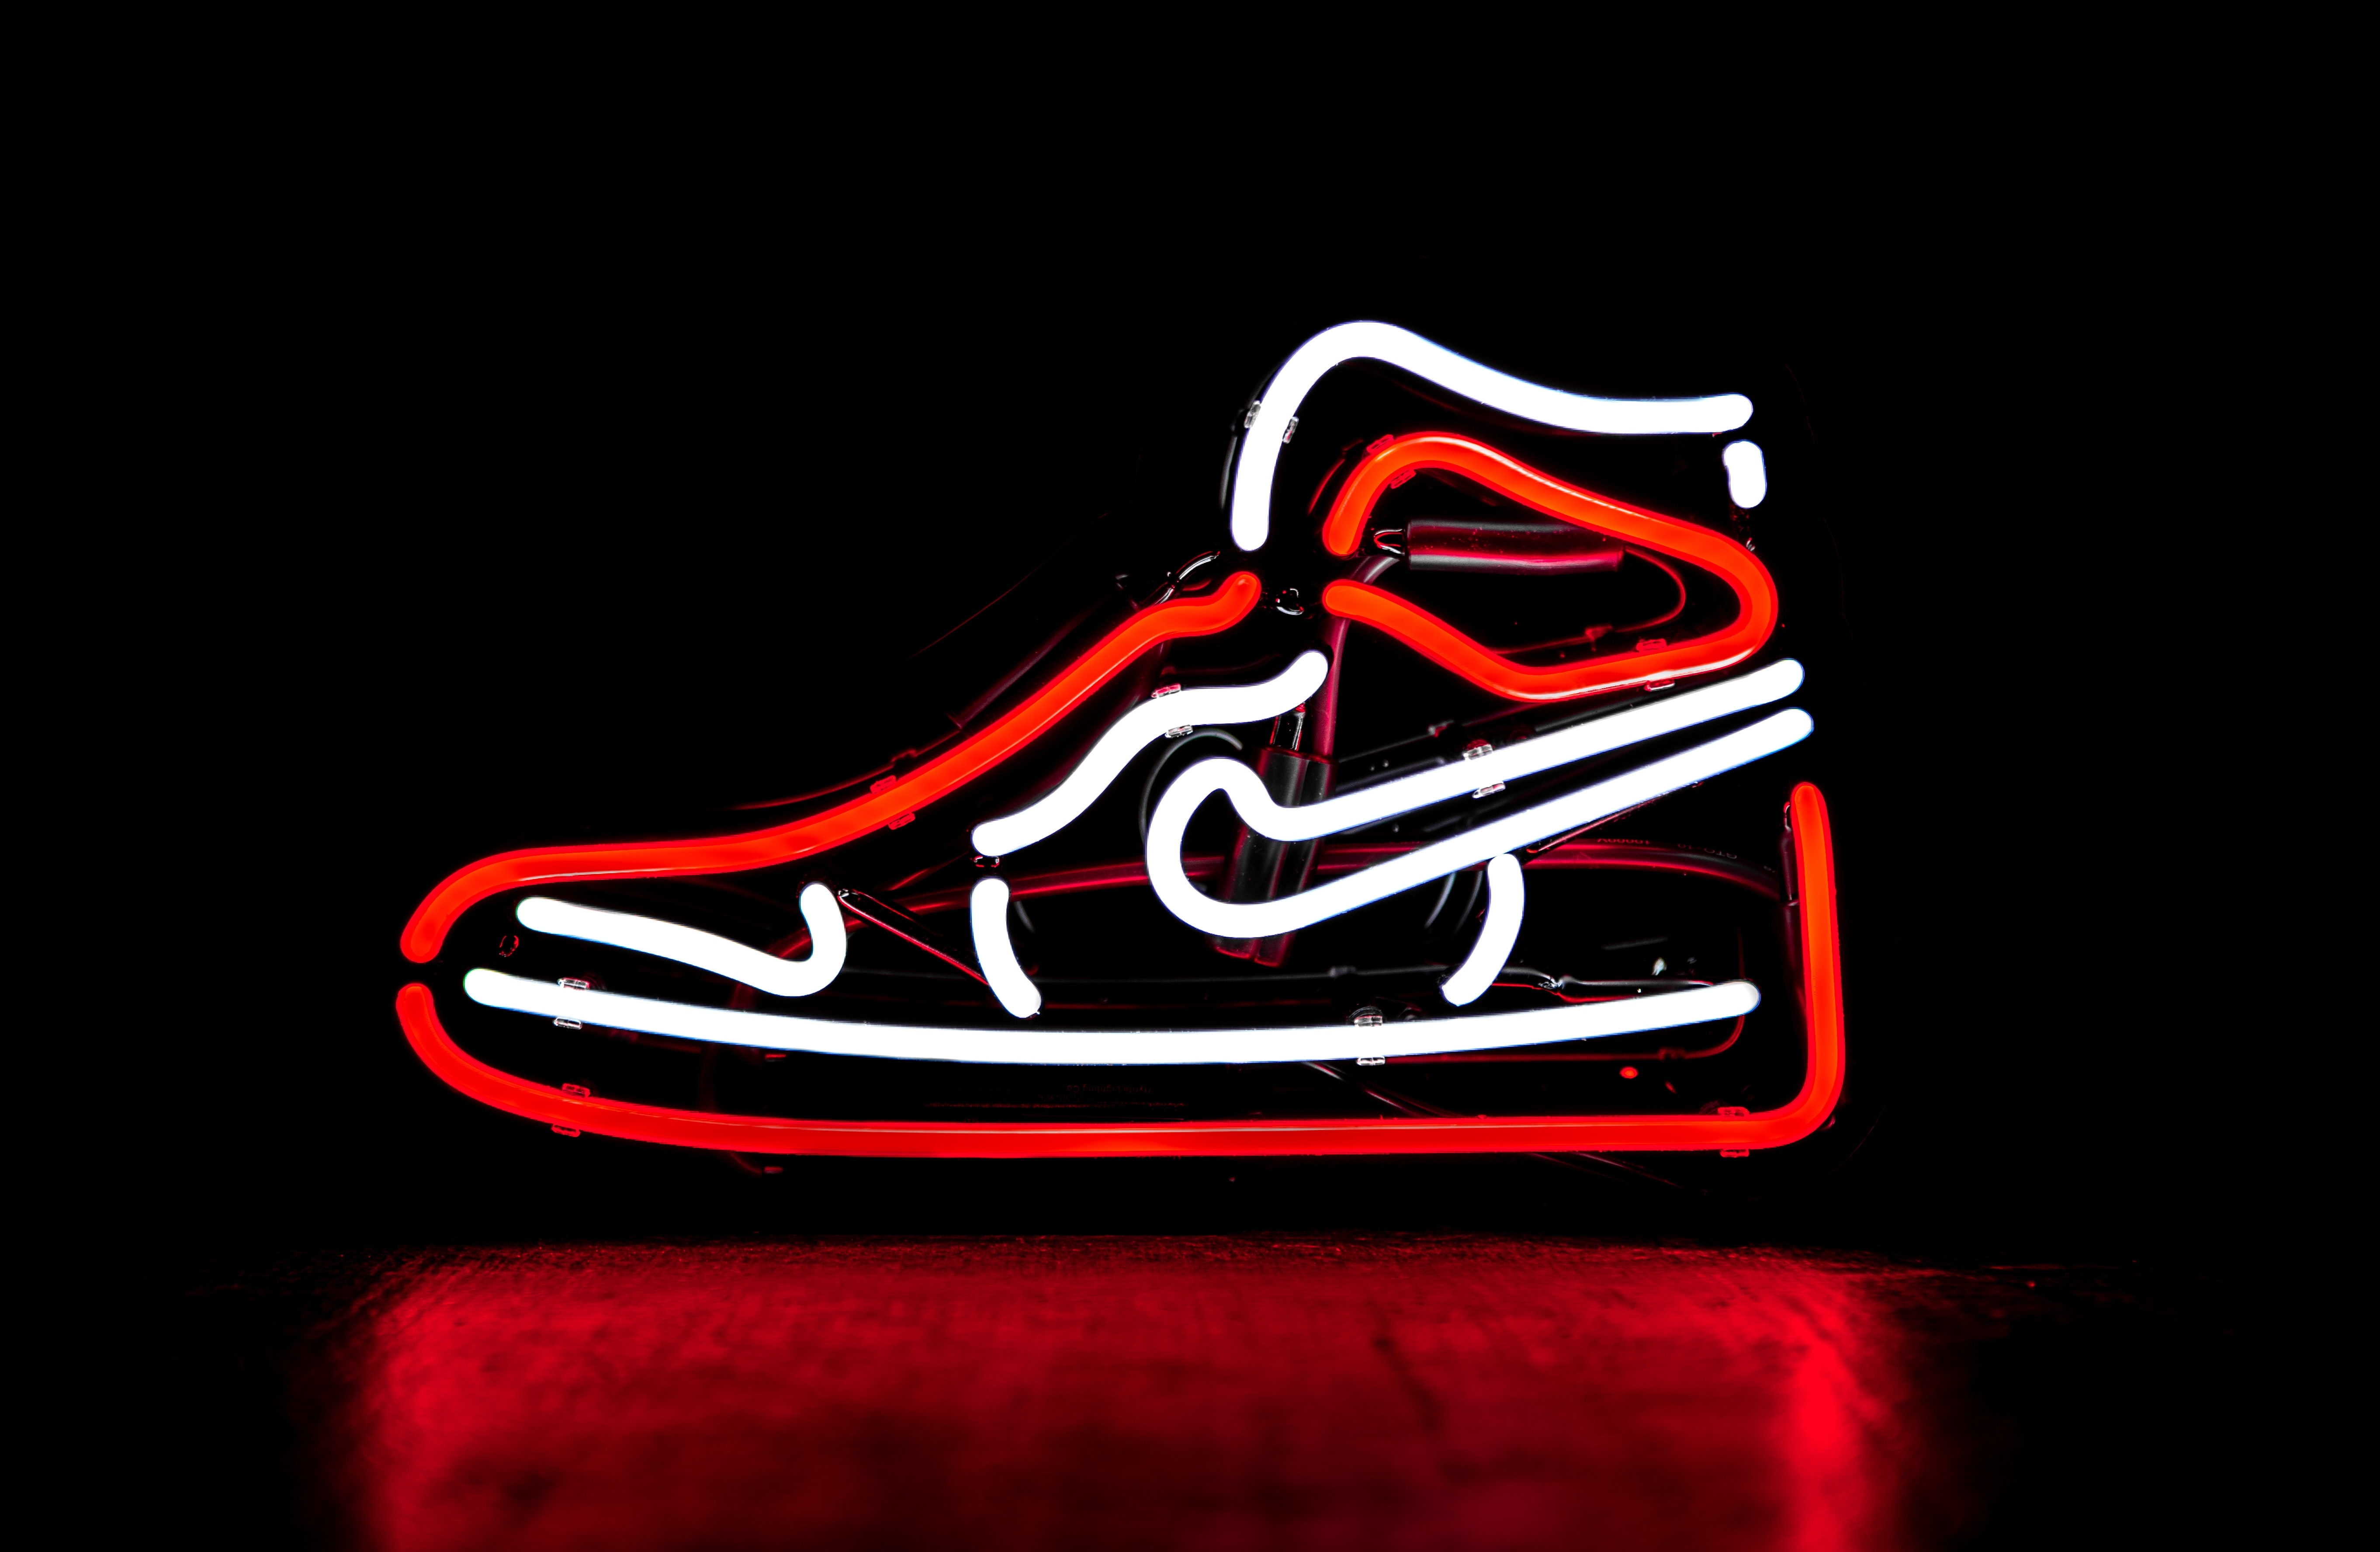 Neon Jordan Retro Shoe Wallpaper, HD Artist 4K Wallpaper, Image, Photo and Background